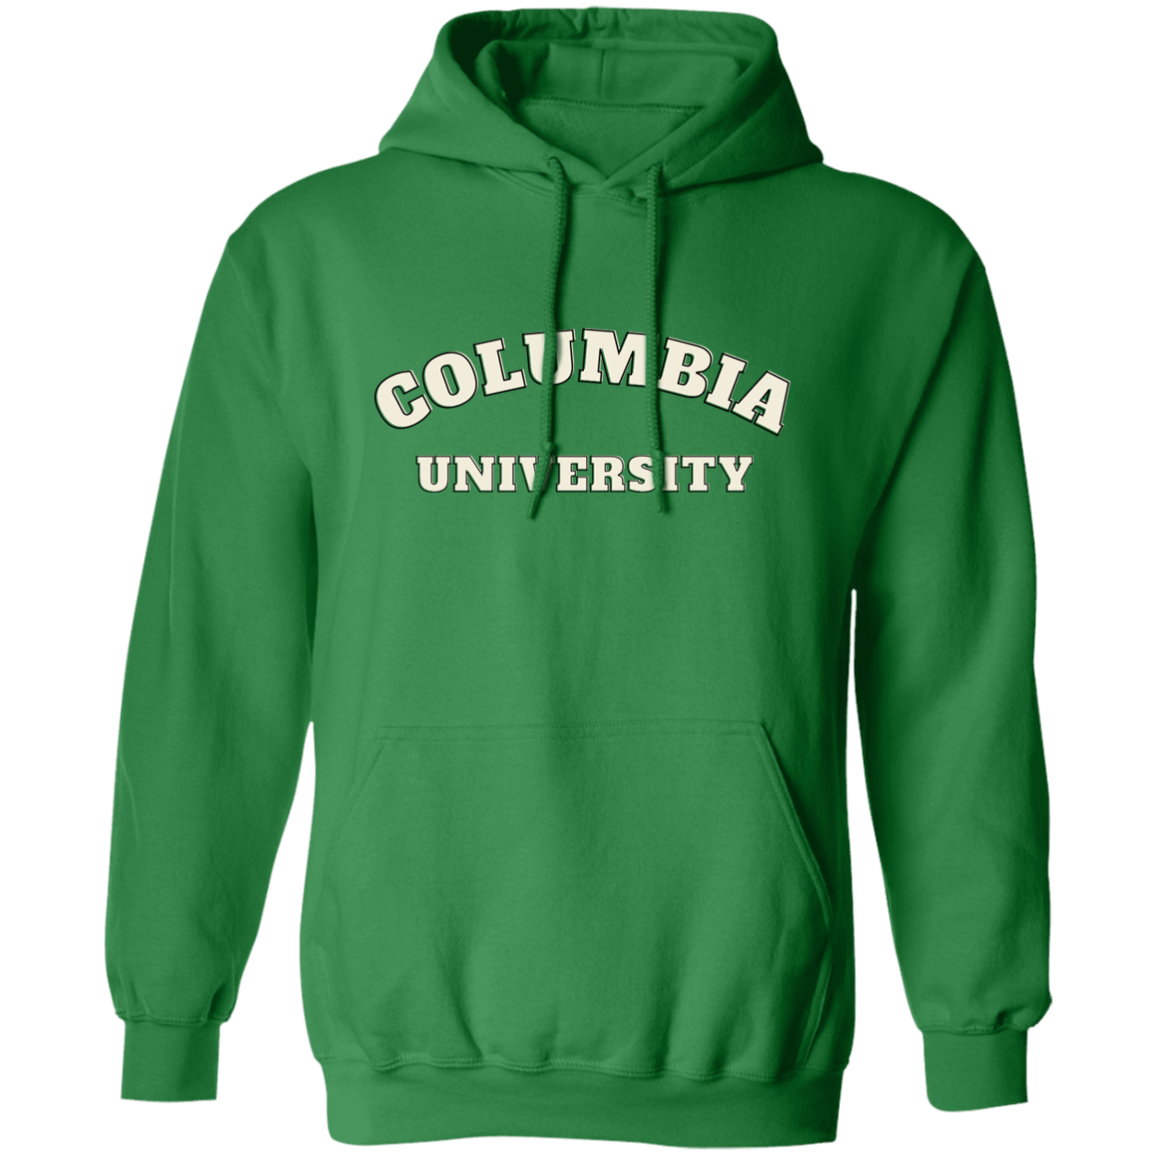 Columbia University College Pullover Hoodie, Birthday Gift